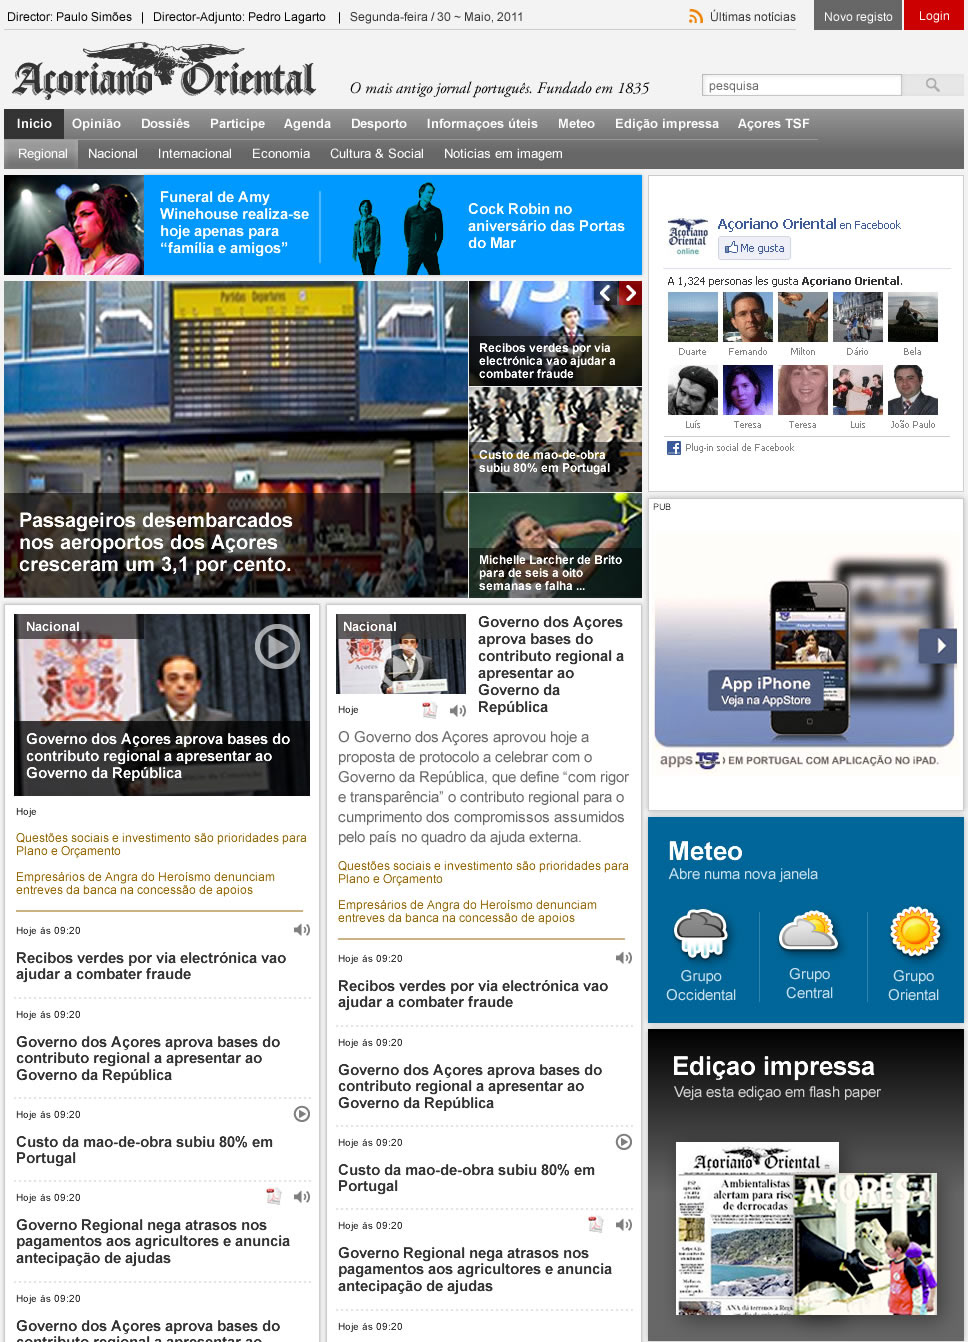 Web portuguese Portugal newspaper newspaper design daily news design  information architecture  web design  journal online newspaper